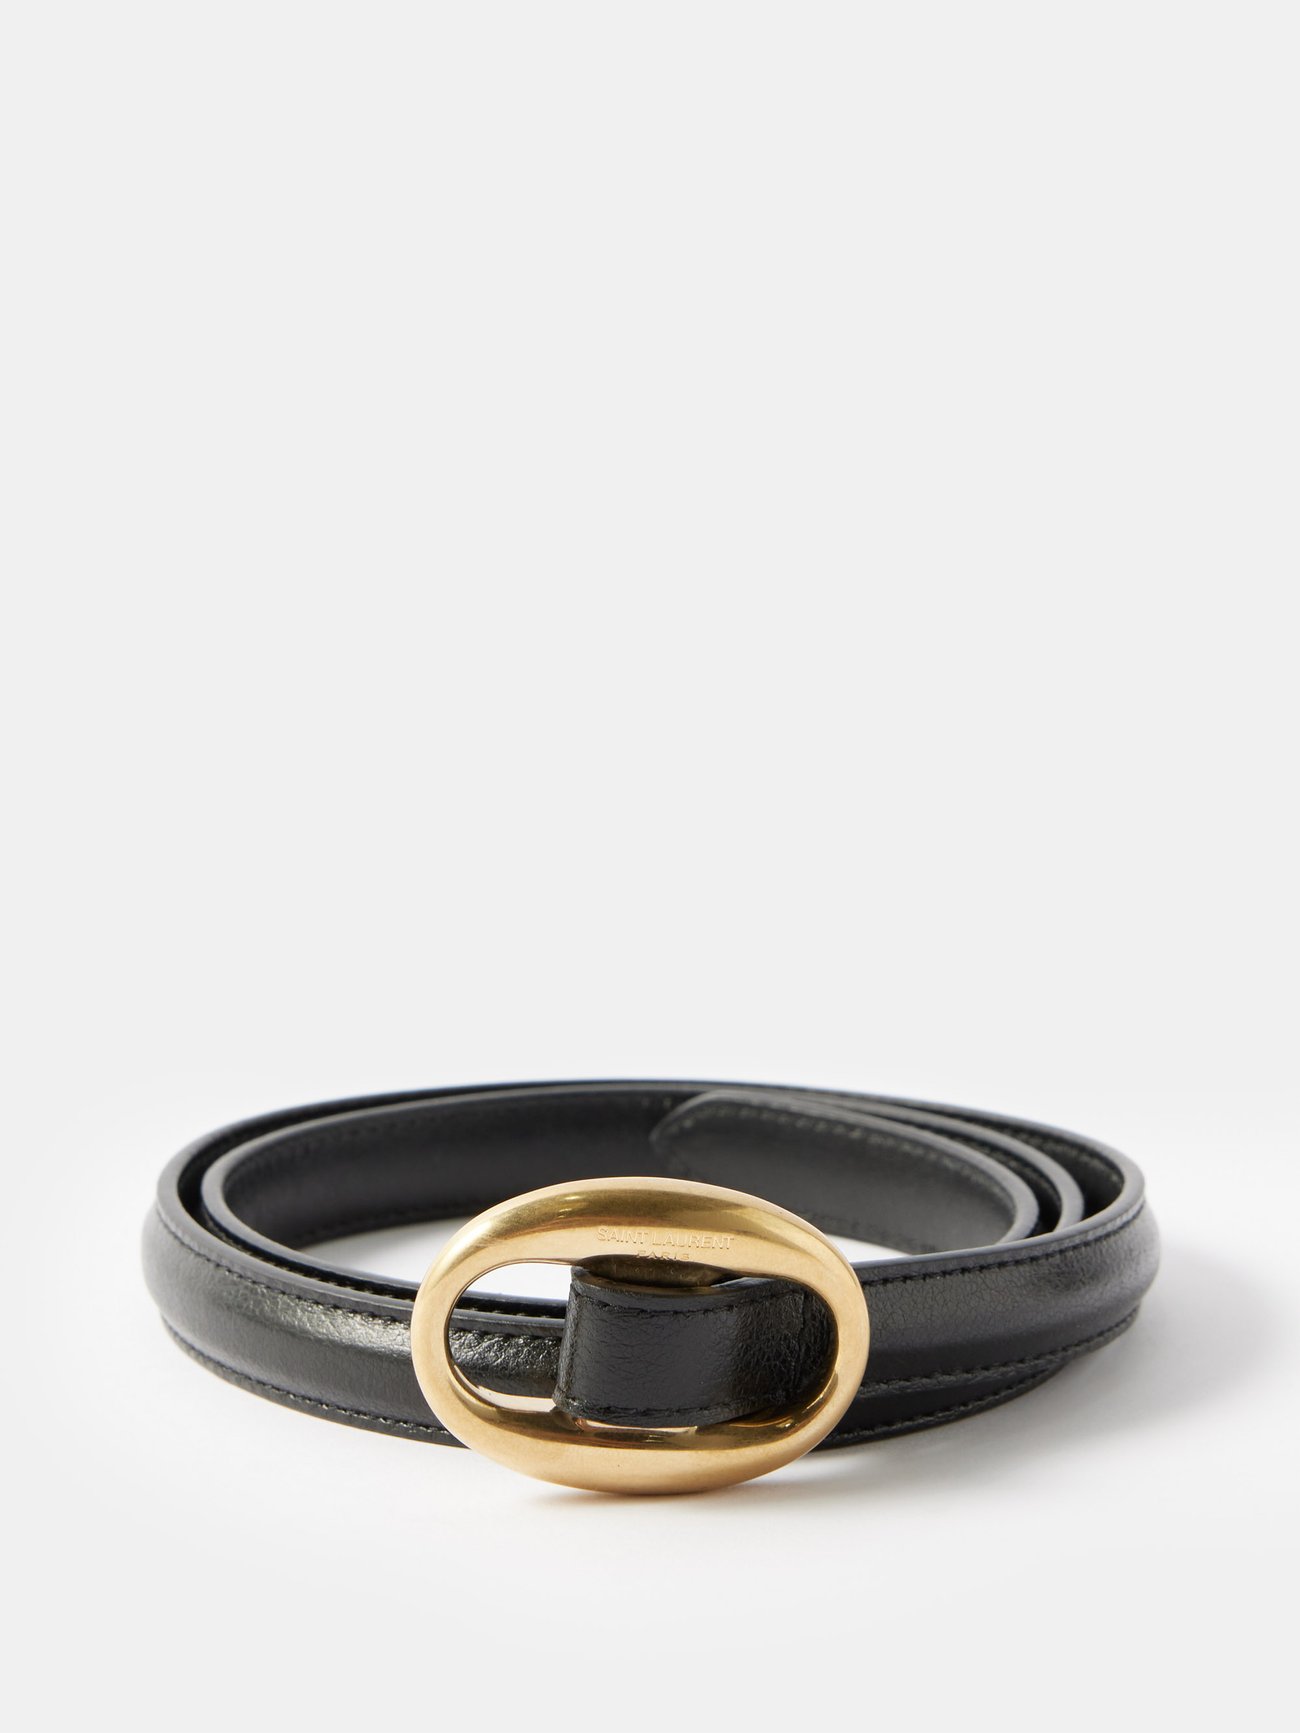 Yves Saint Laurent Buckle Belts for Men